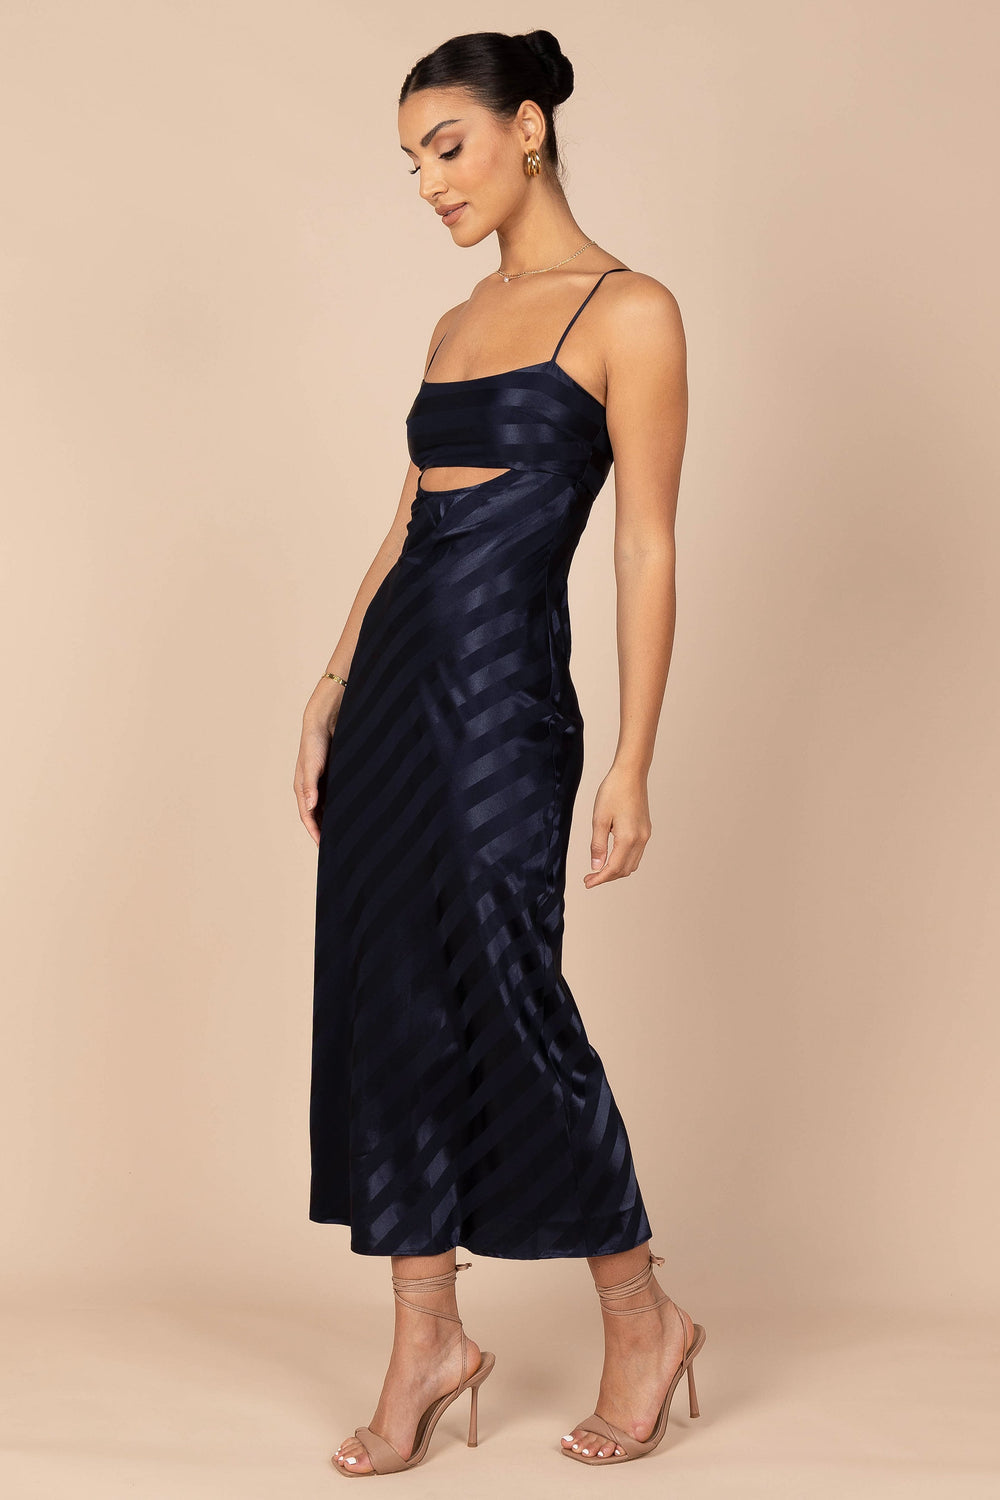 DRESSES @Braxton Slip Dress - Navy